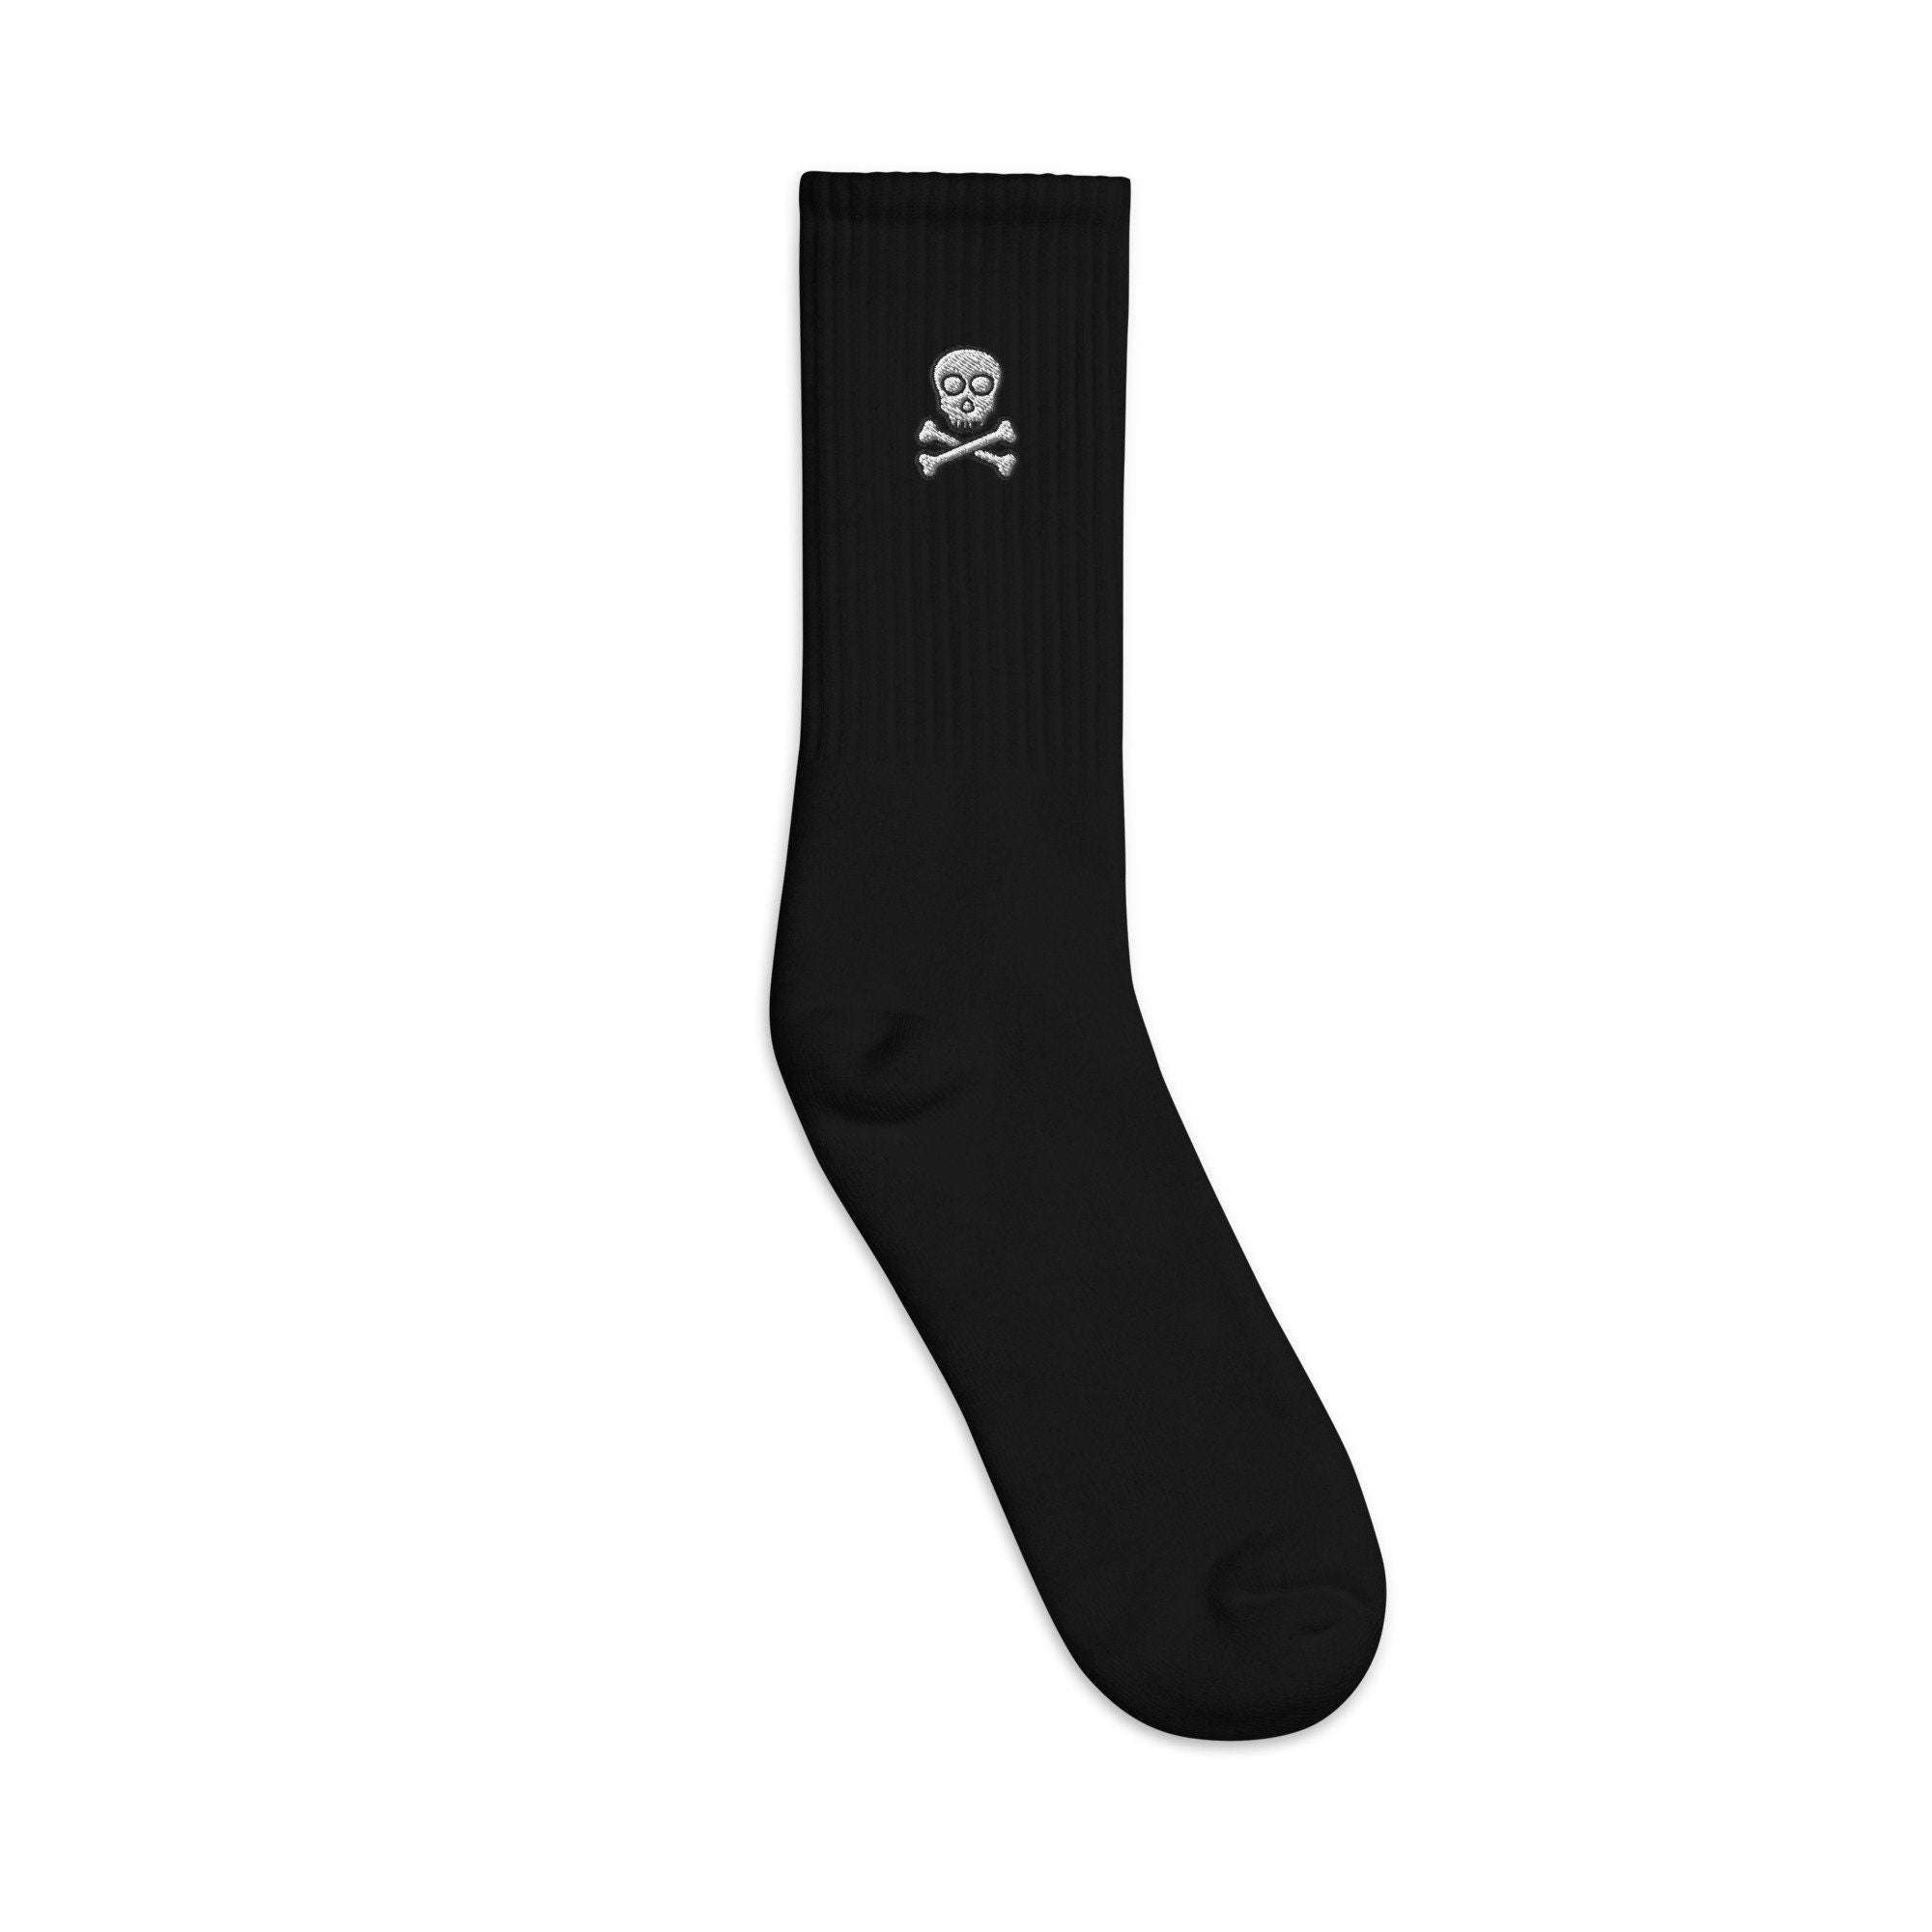 Skull and Crossbones Embroidered Socks, Premium Embroidered Socks, Long Socks Gift - Multiple Colors